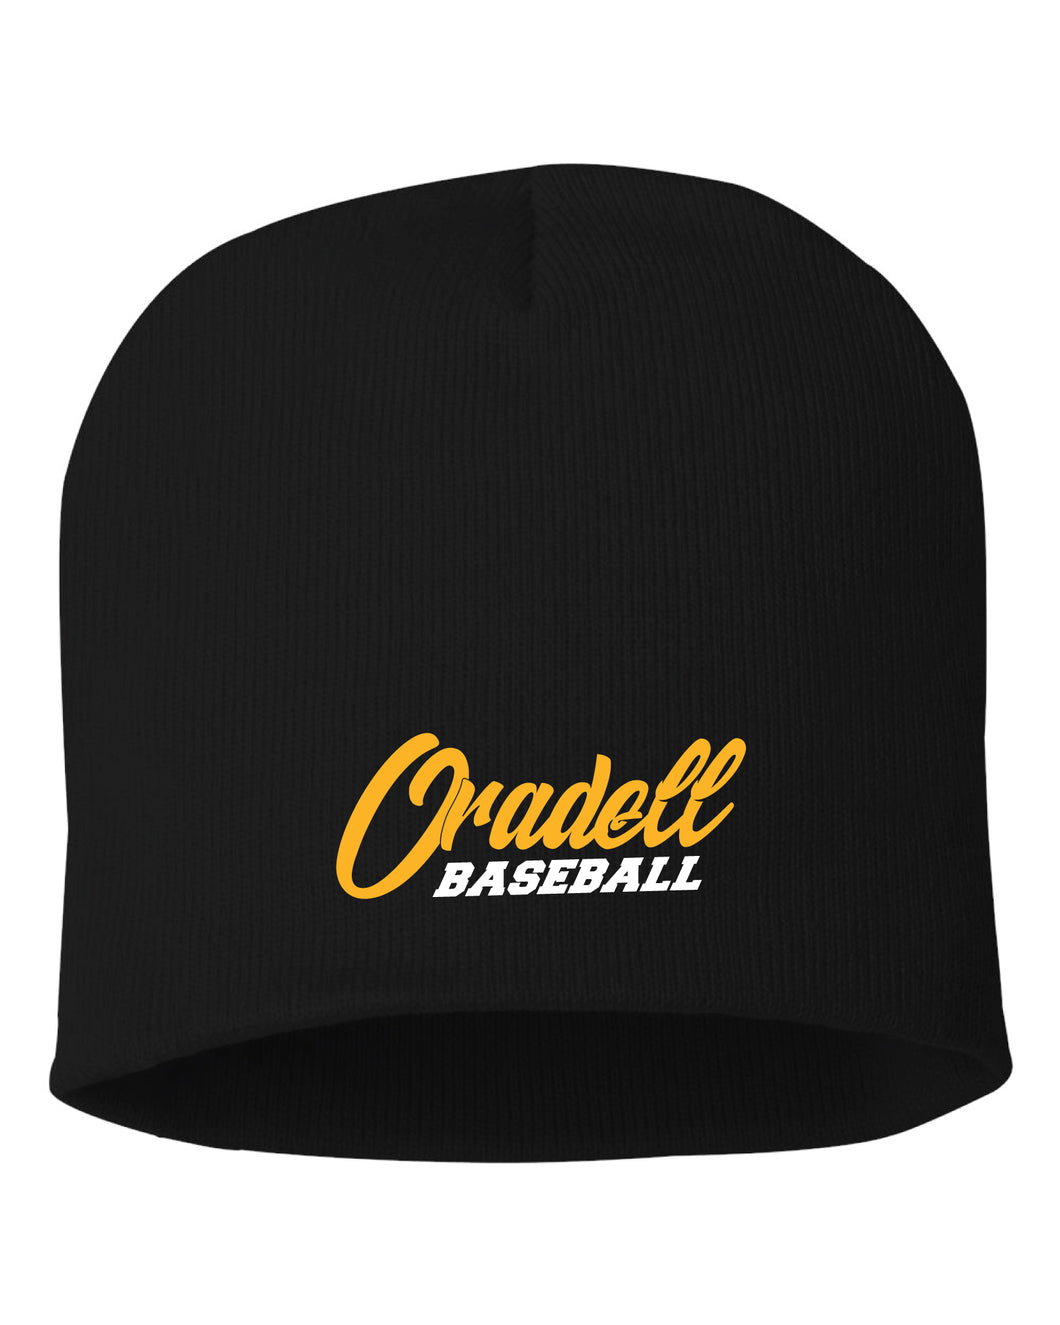 Oradell Baseball Beanie Hat - Black